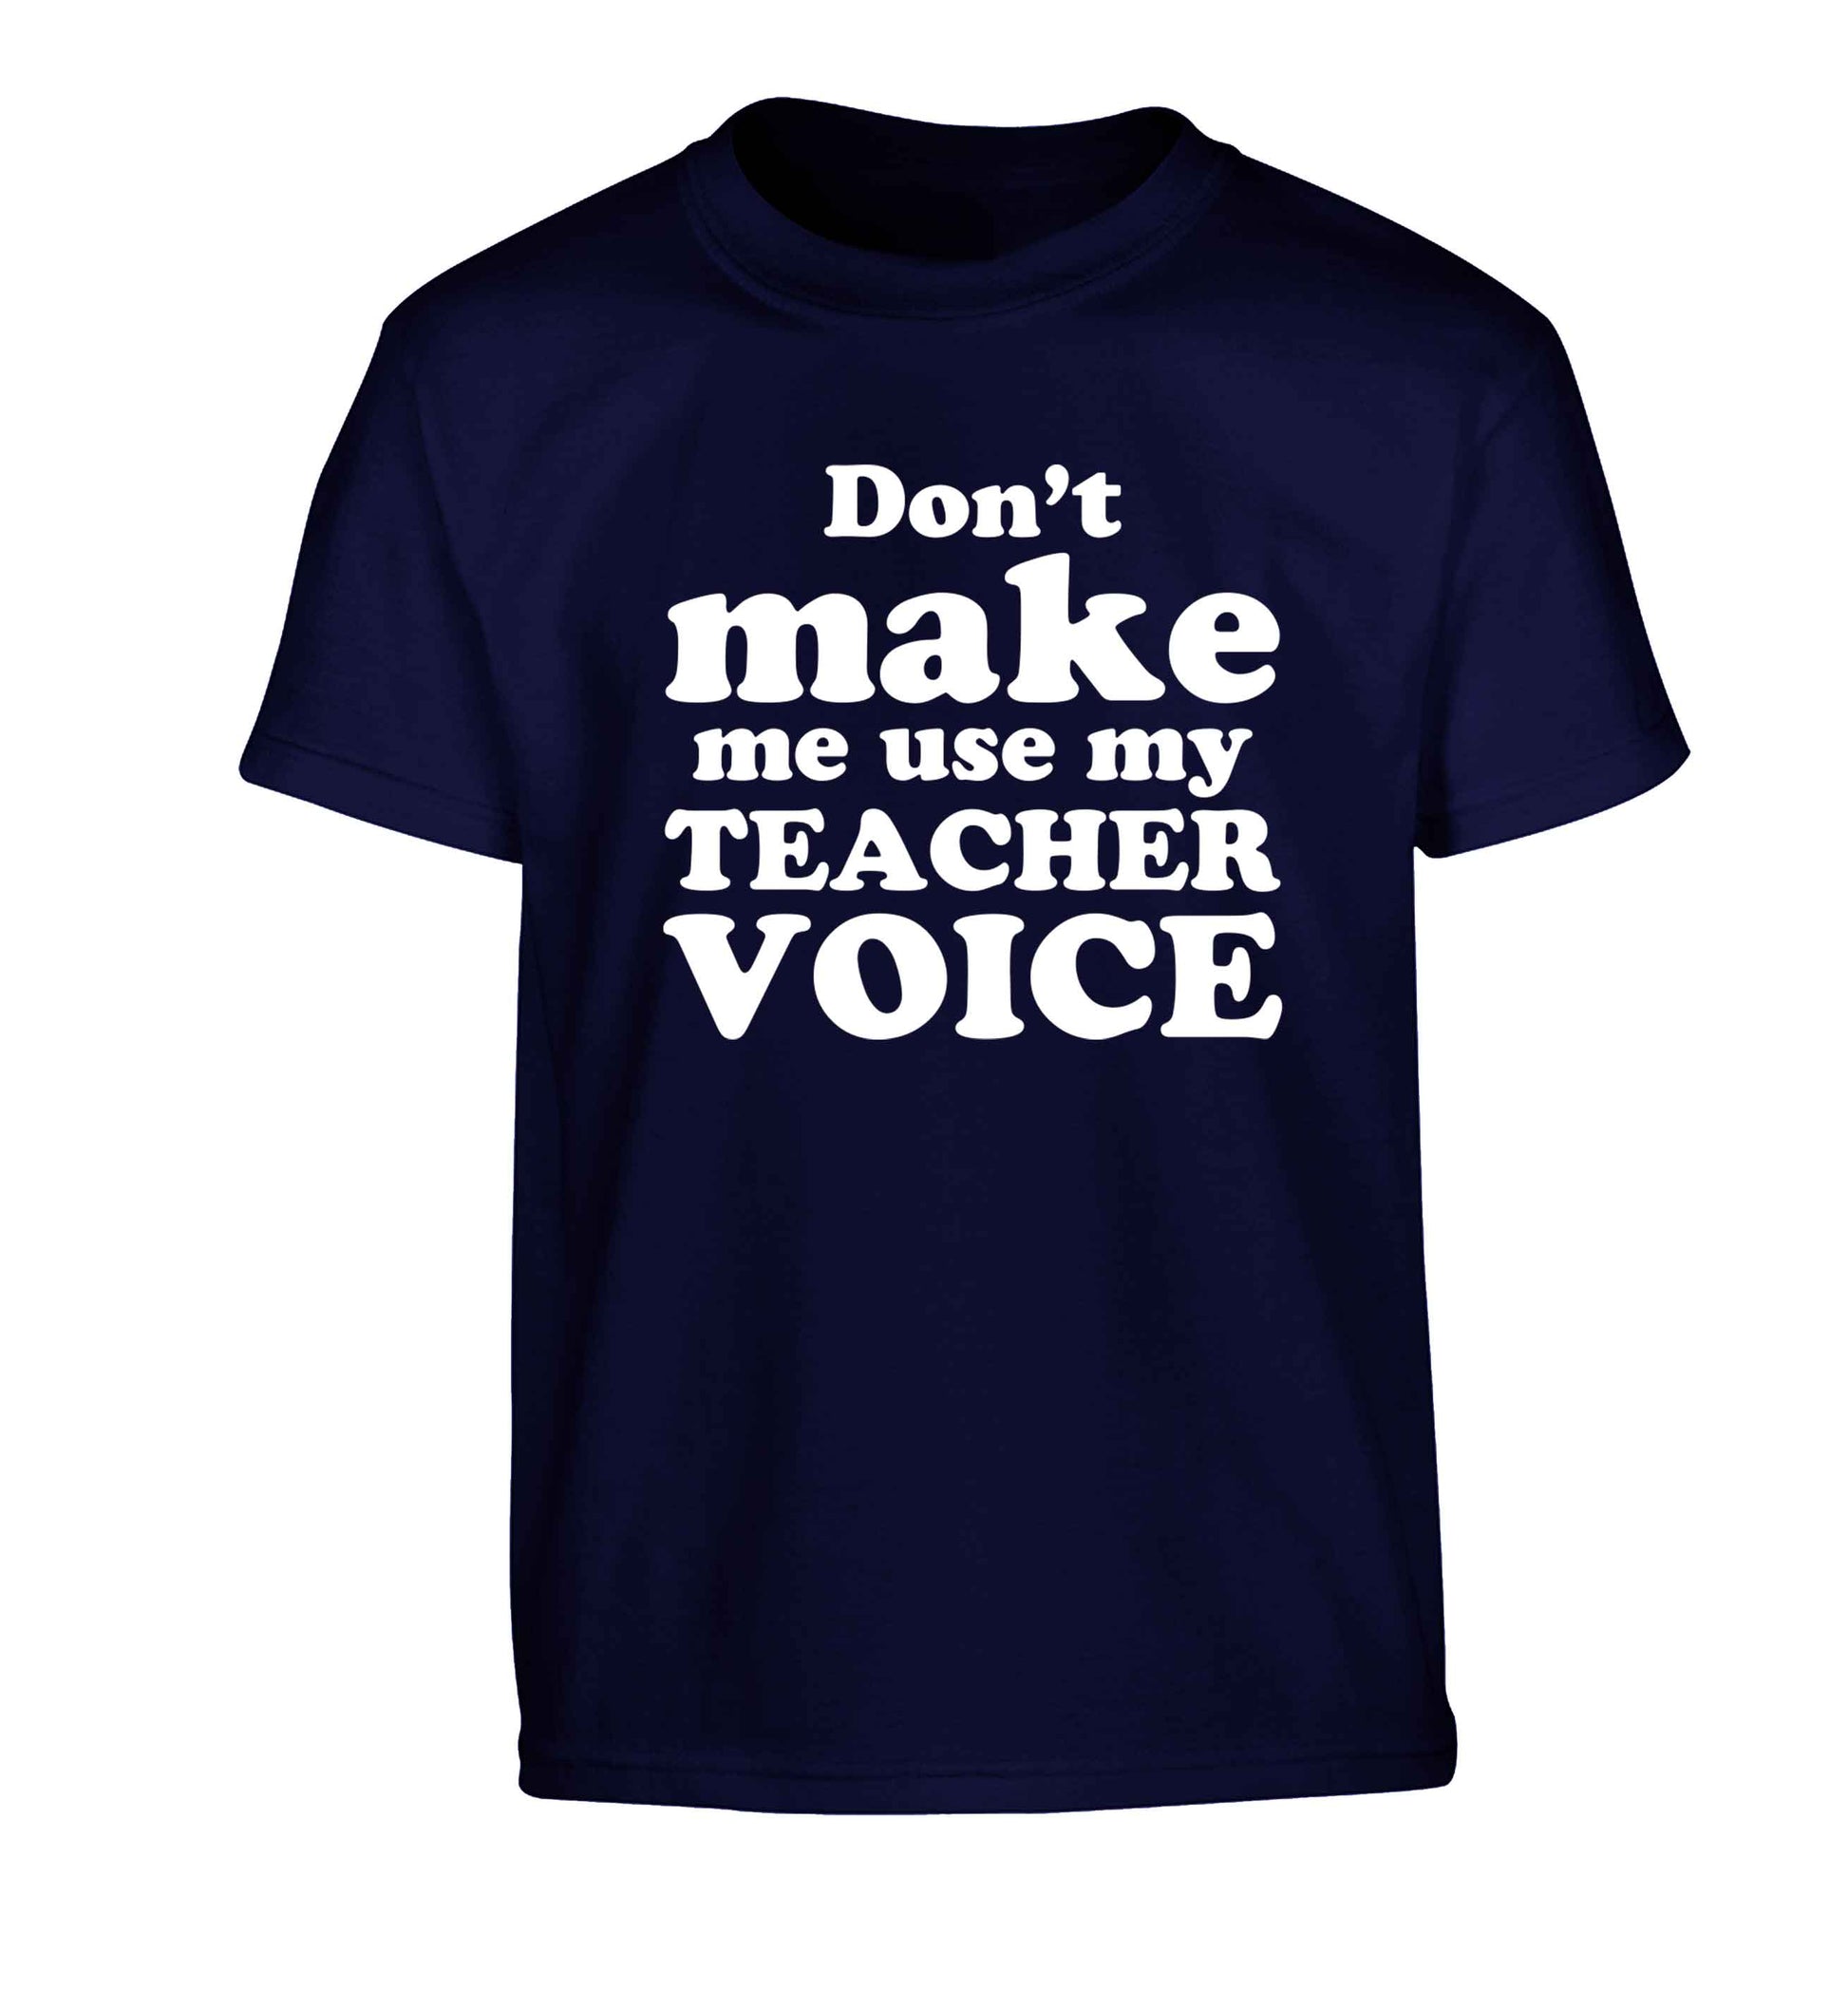 Don't make me use my teacher voice Children's navy Tshirt 12-13 Years